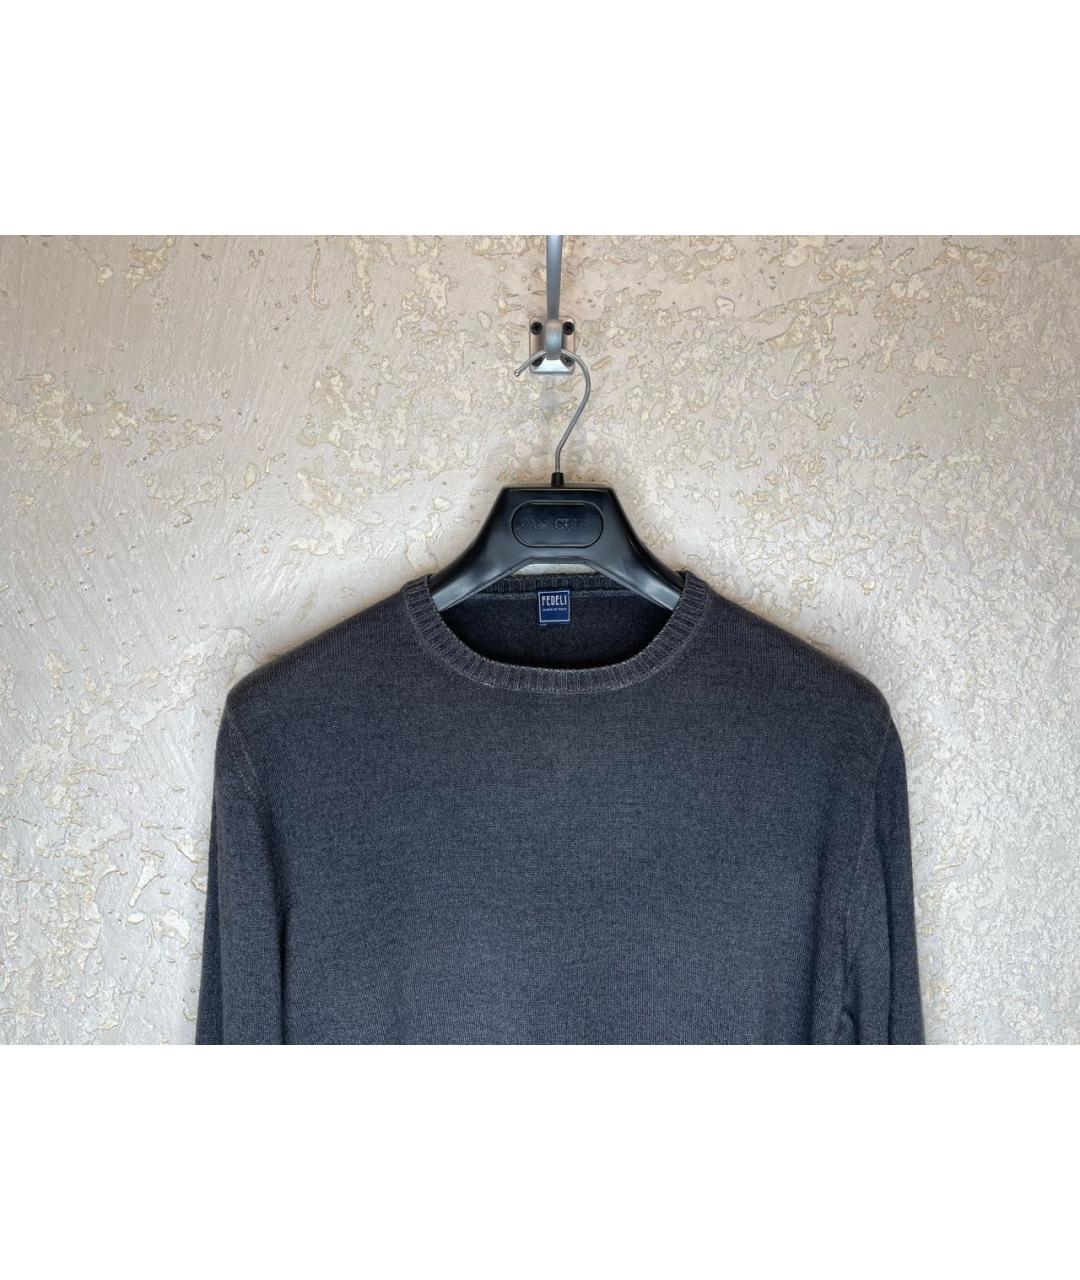 FEDELI Серый шерстяной джемпер / свитер, фото 2